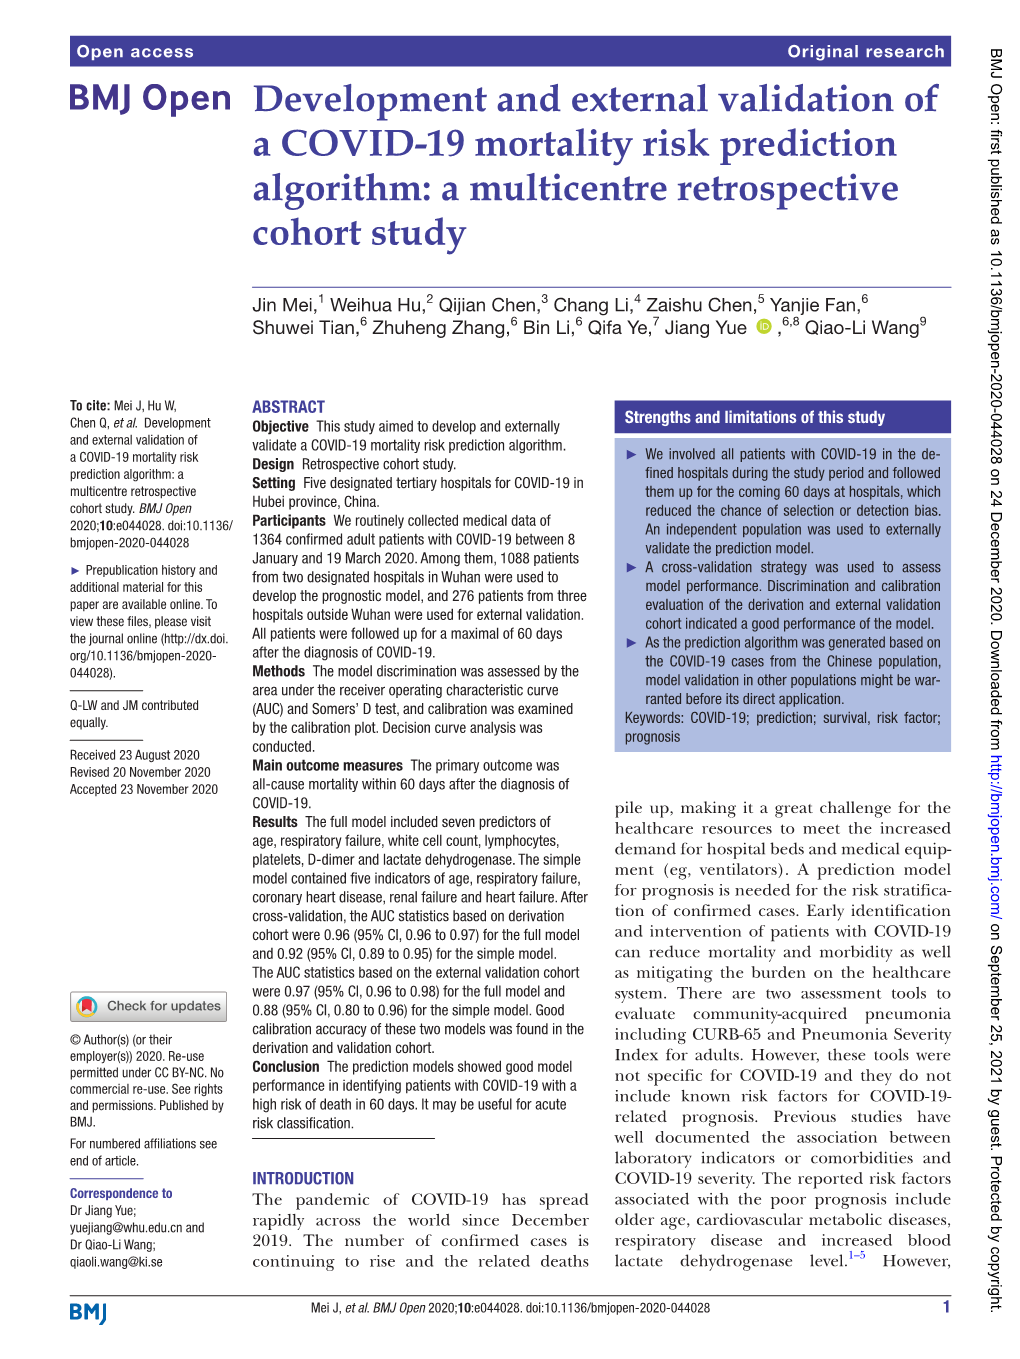 Development and External Validation of a COVID-19 Mortality Risk Prediction Algorithm: a Multicentre Retrospective Cohort Study